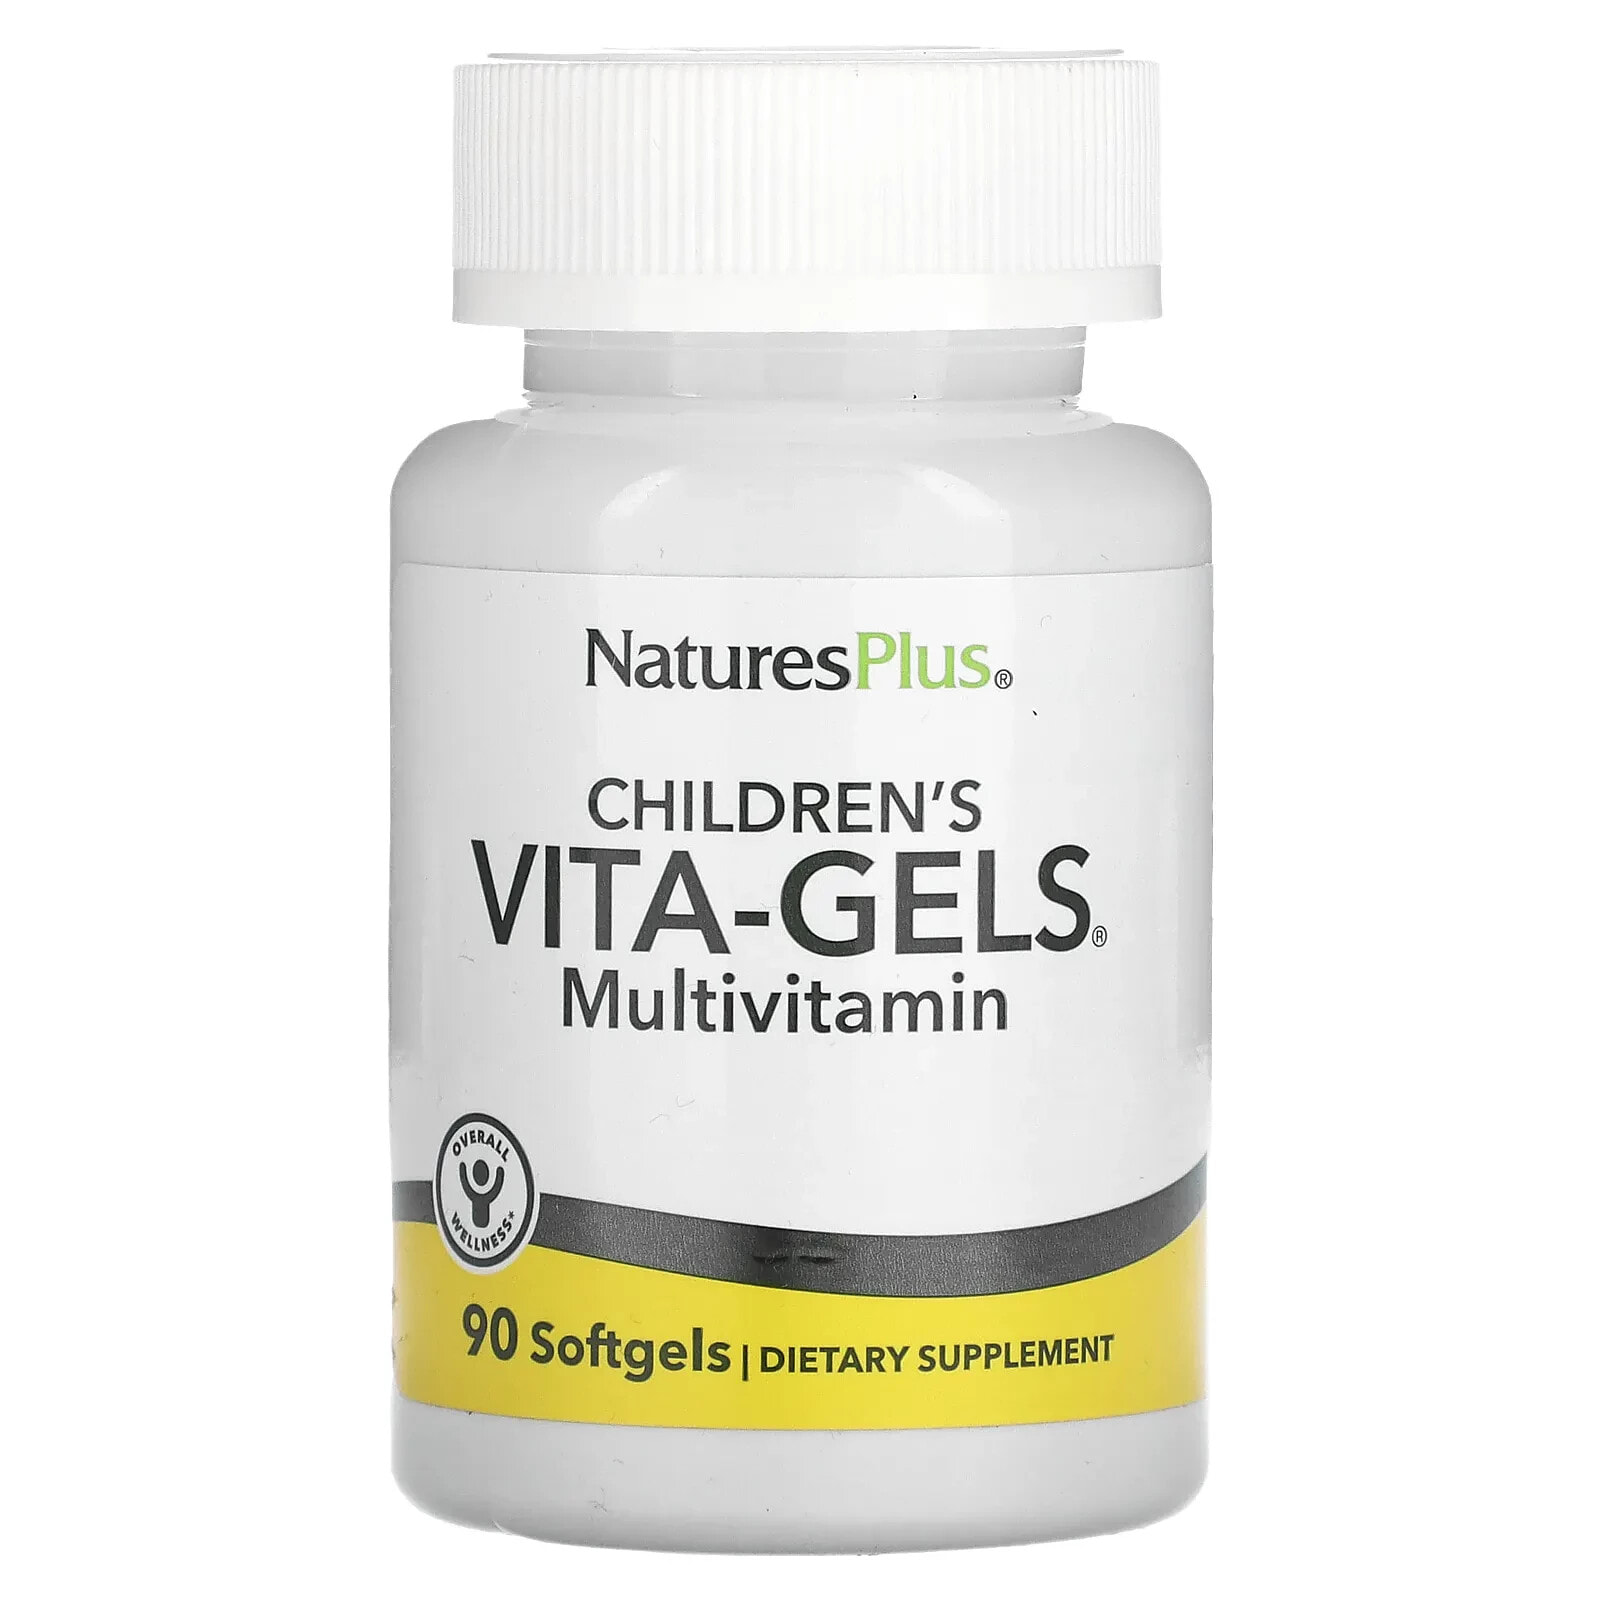 Children's Vita-Gels Multivitamin, Orange, 90 Softgels